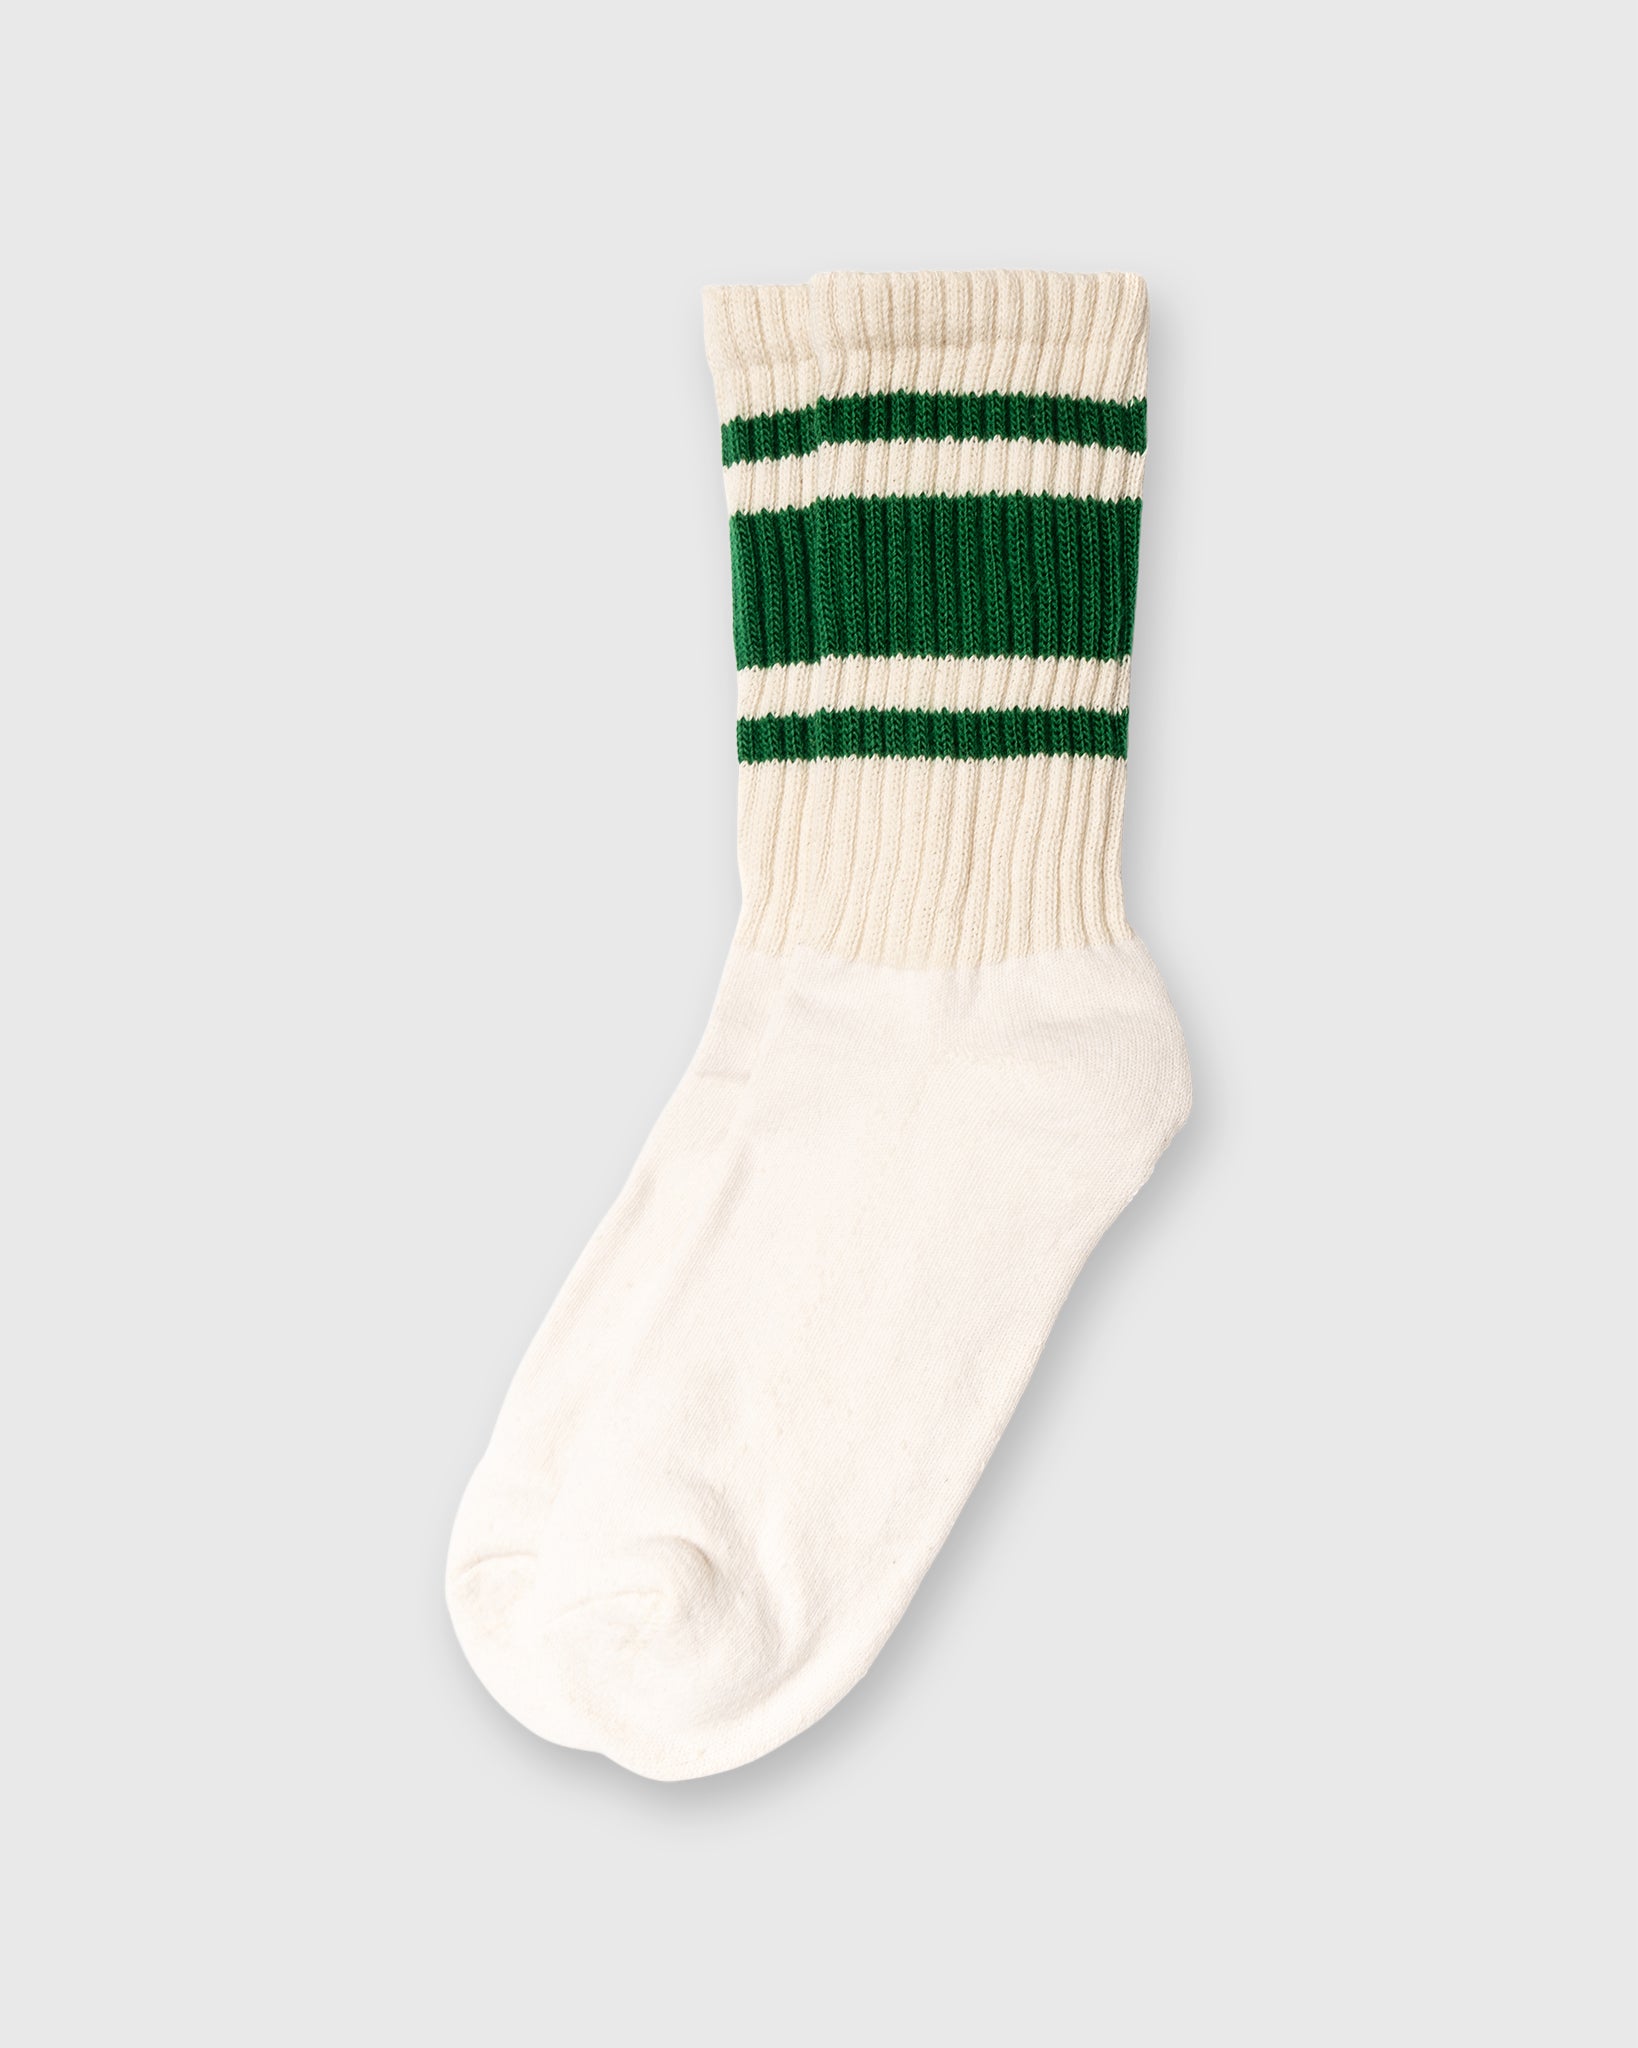 Retro Mono Stripe Socks in Kelly Green